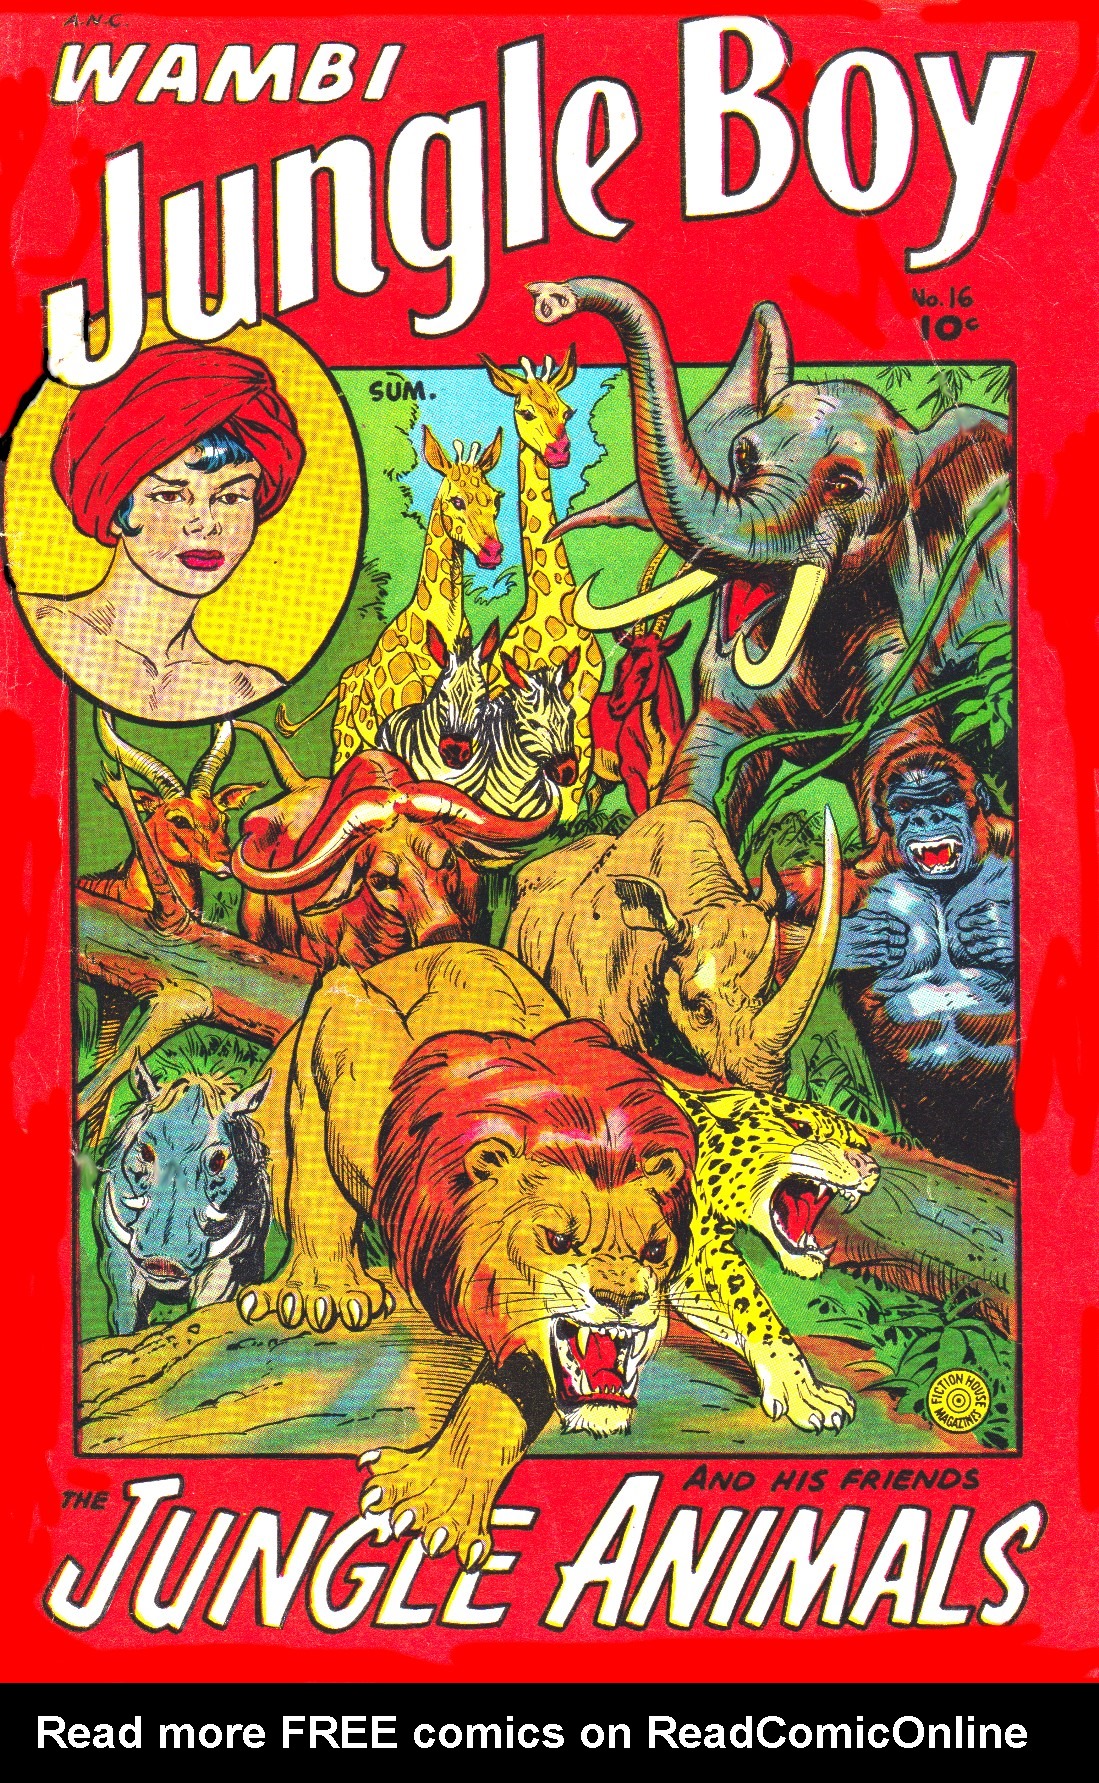 Read online Wambi Jungle Boy comic -  Issue #16 - 1